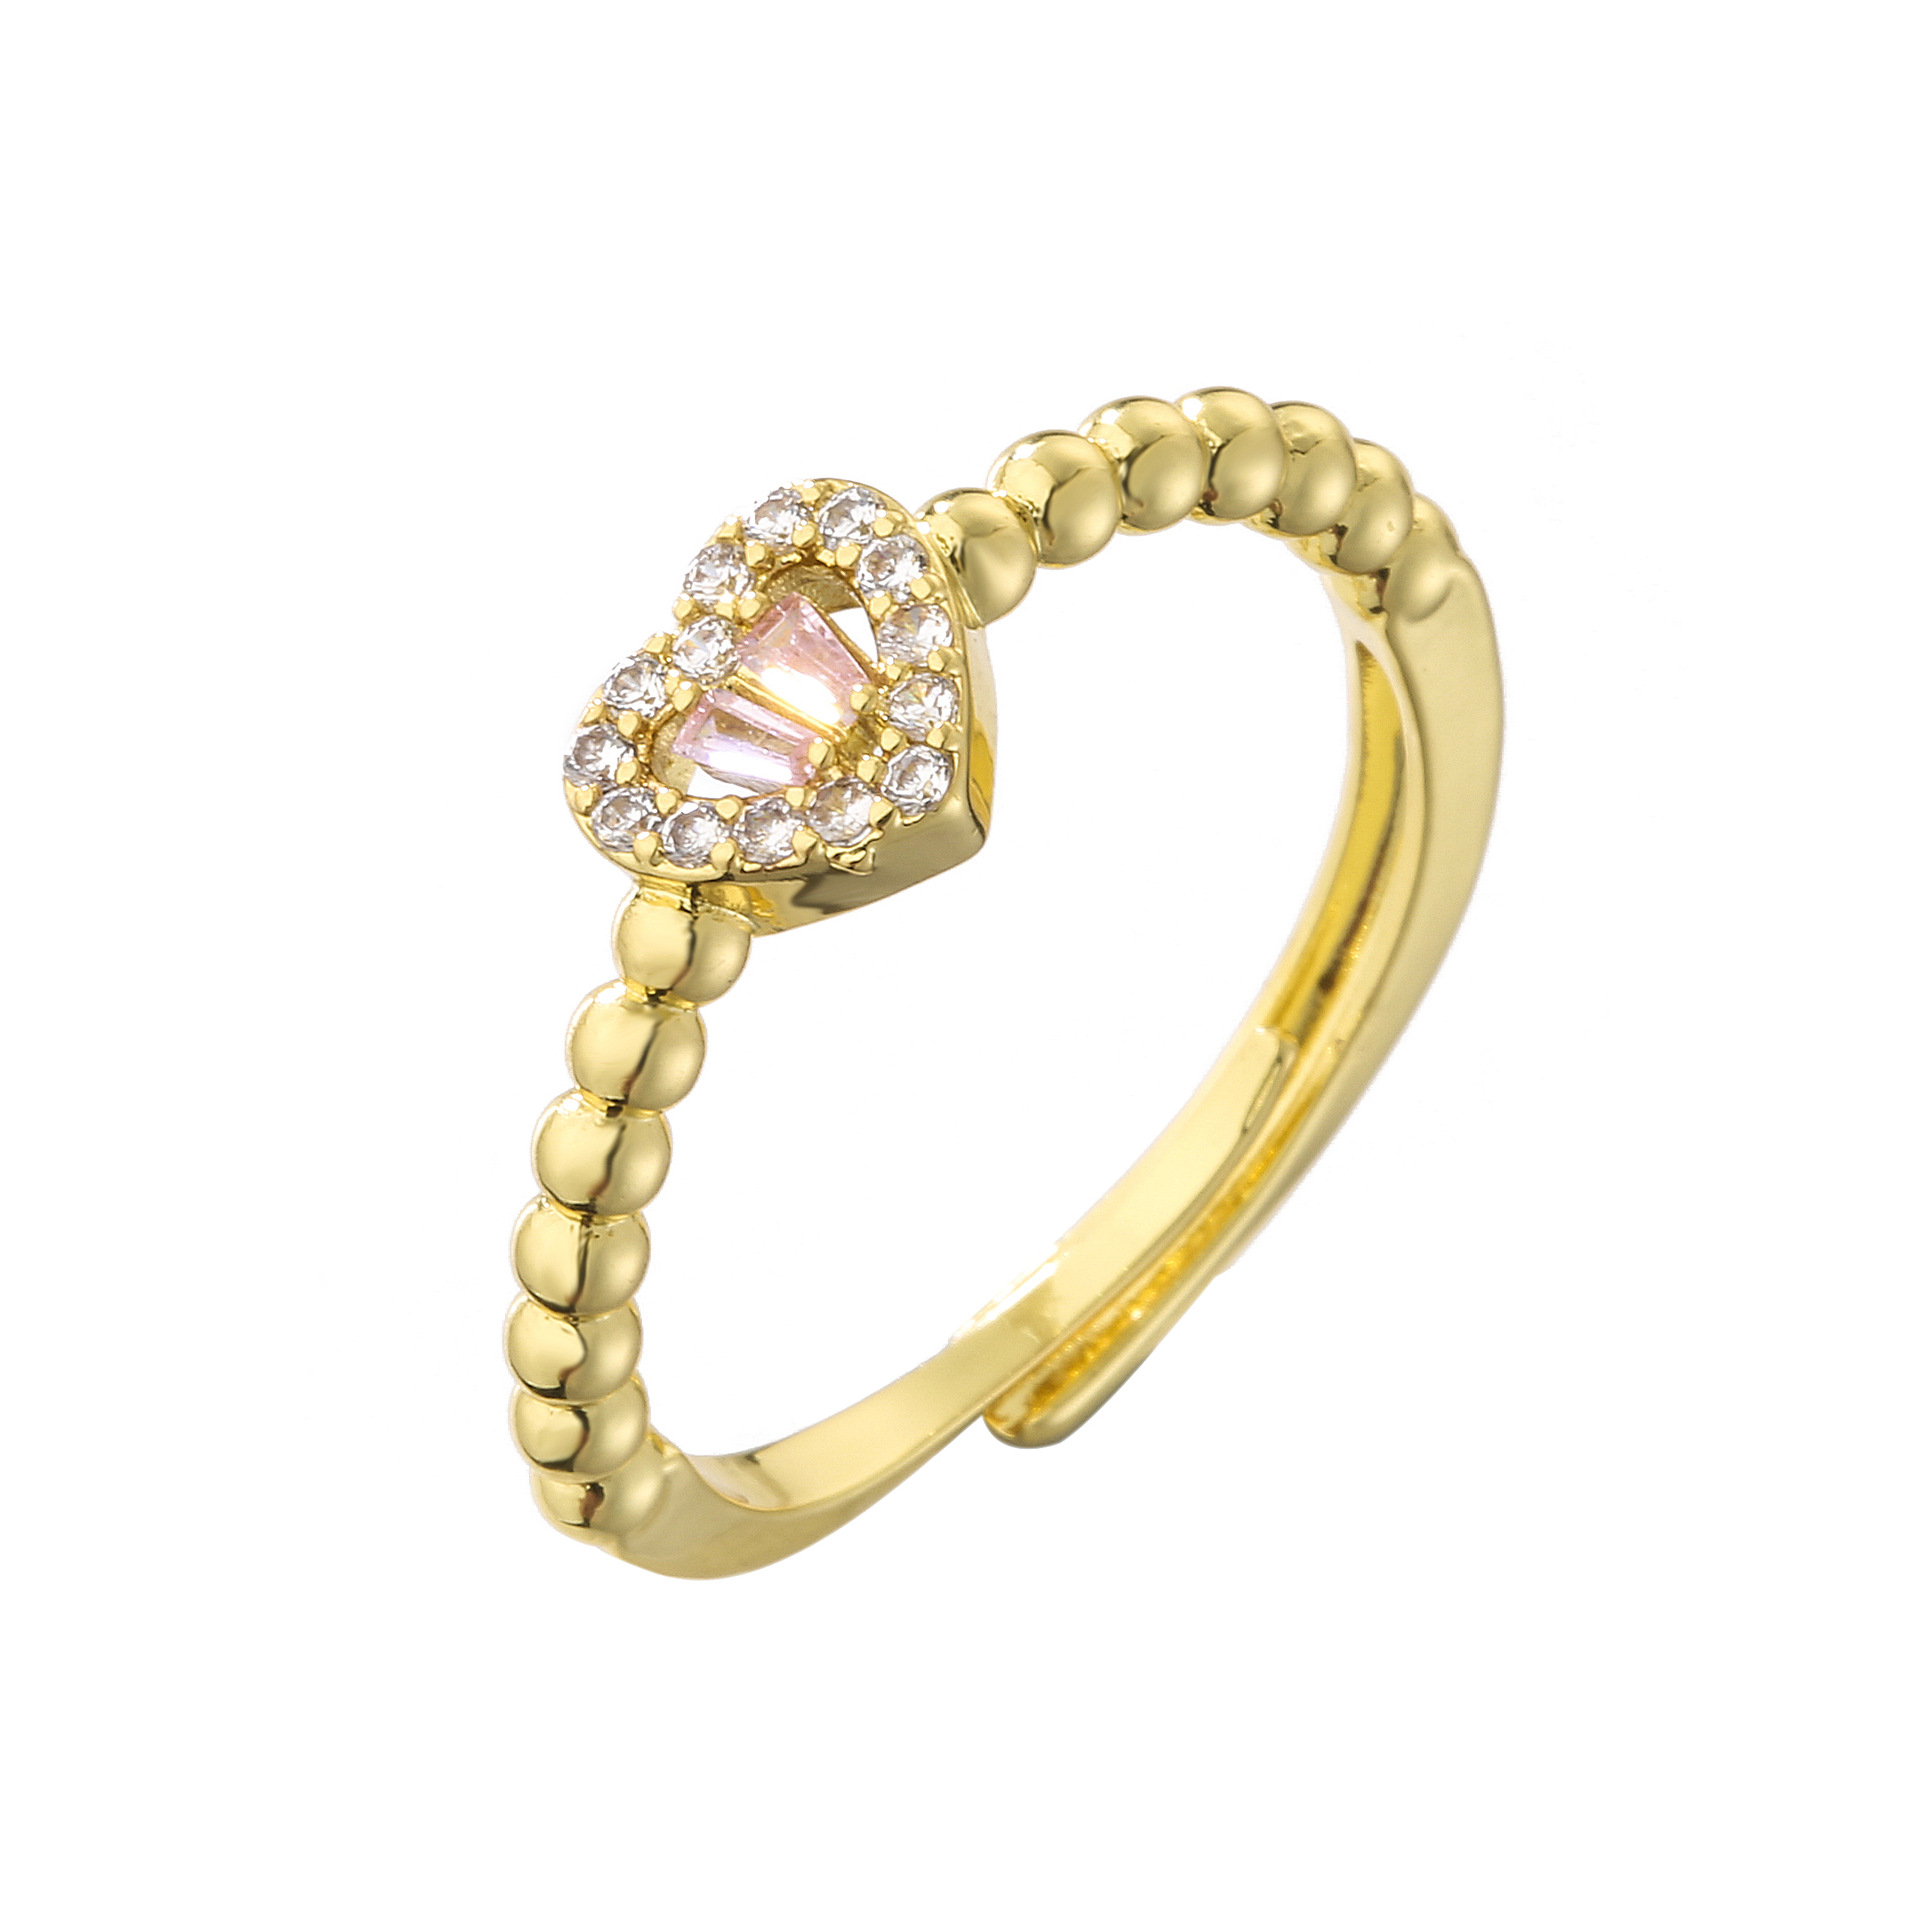 1:Gold Pink Diamond